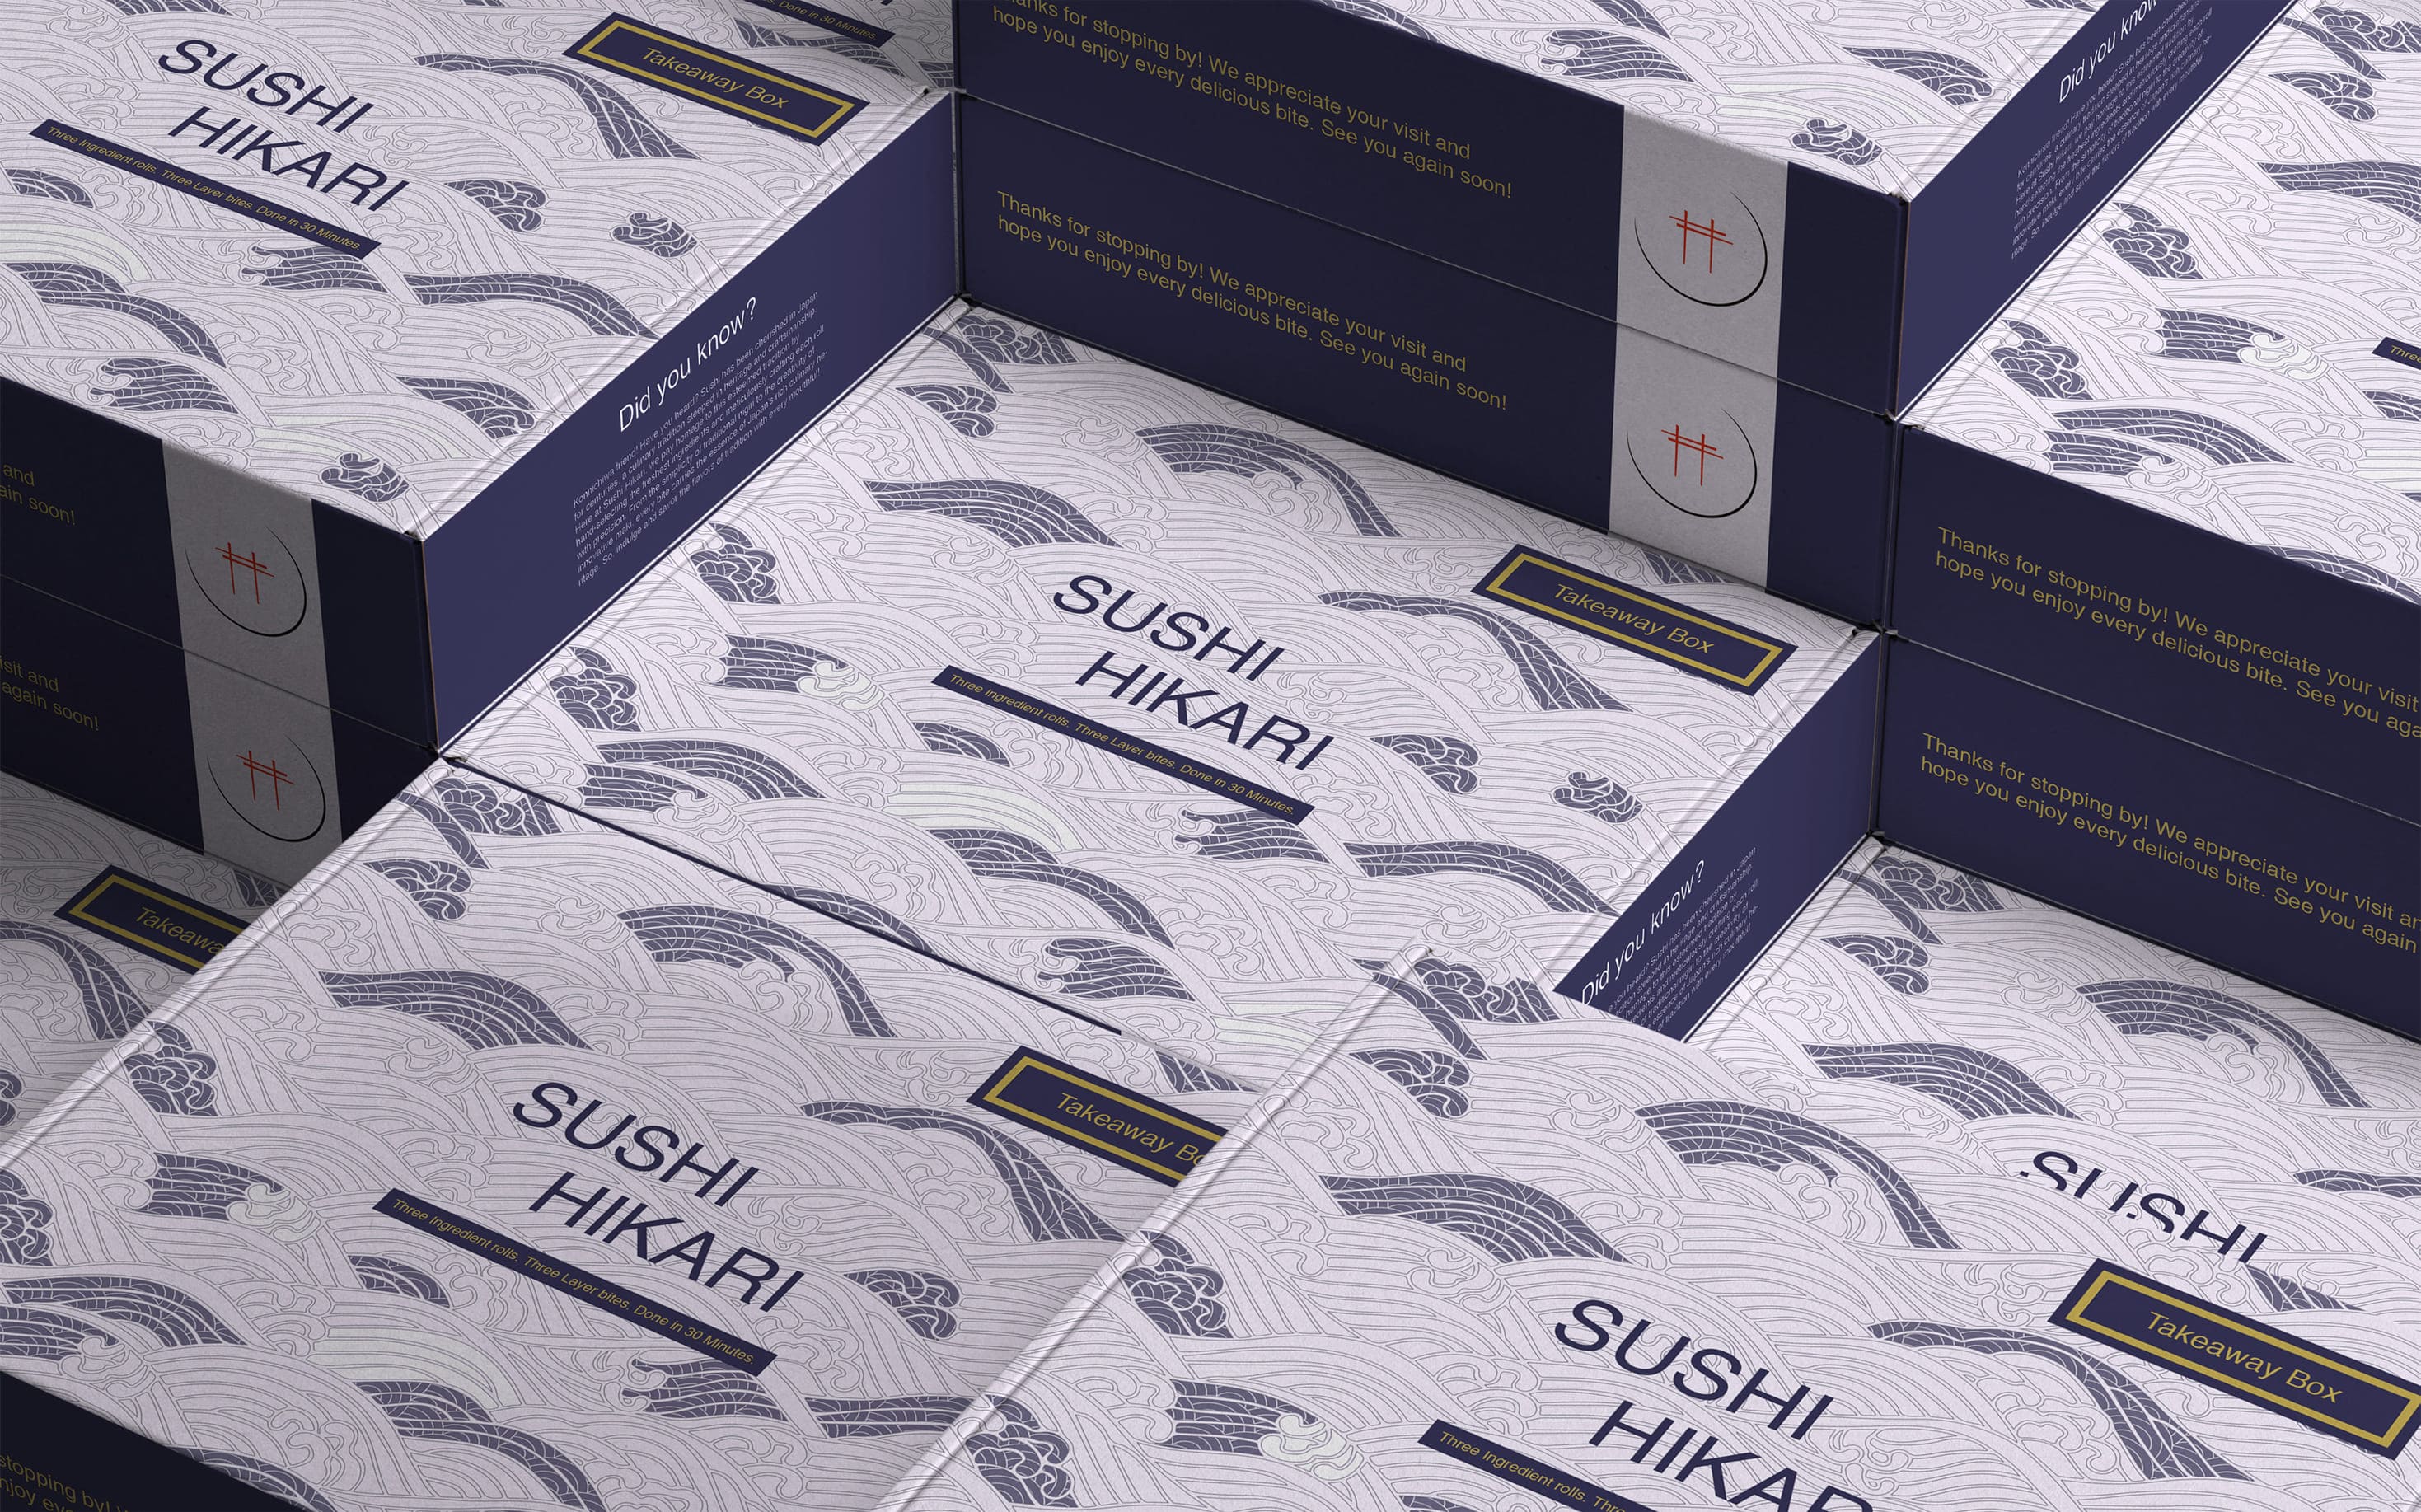 Sushi Hikari’s Authentic Sushi Branding and Identity Designed by Samuel Pires